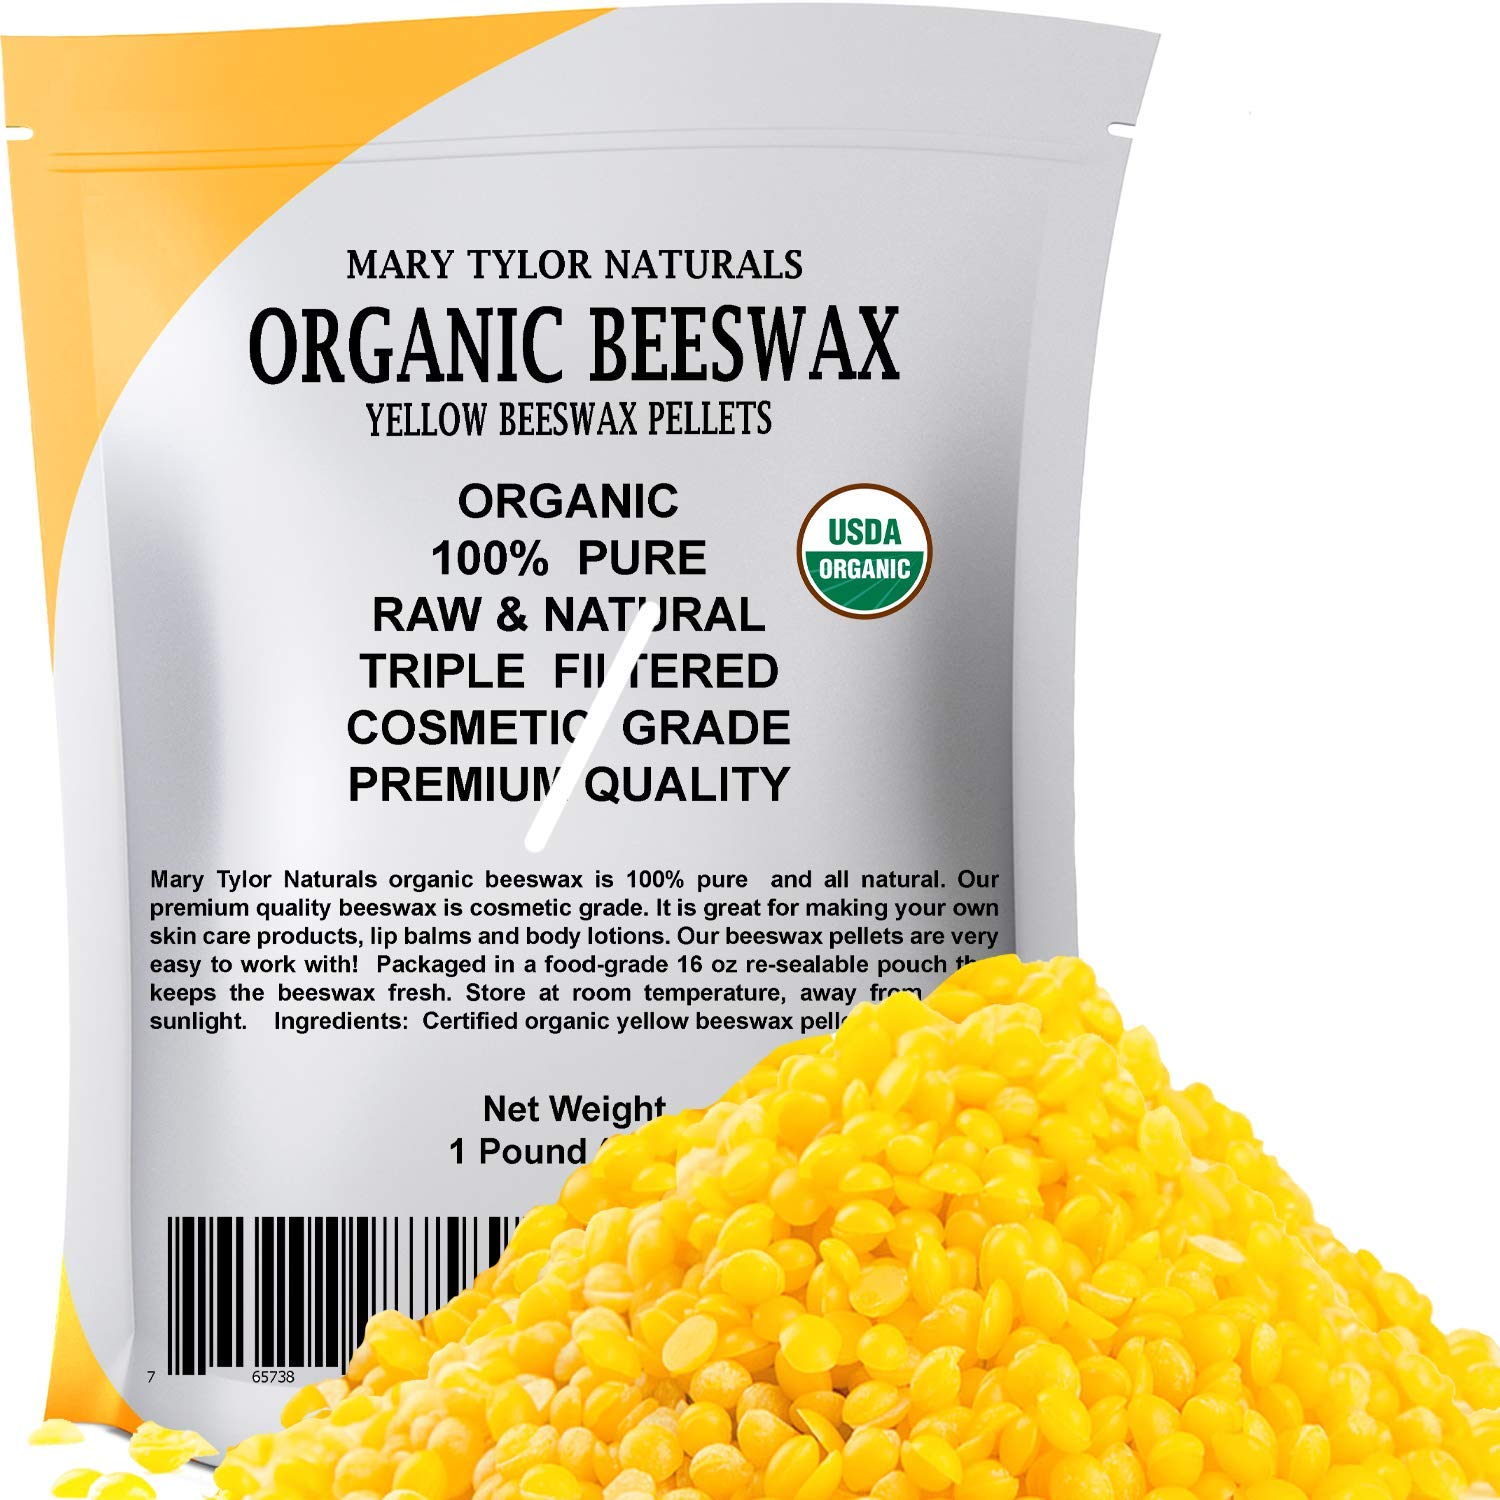 US Organic Beeswax Yellow Pastille, 100% Pure Certified USDA Organic, 16oz